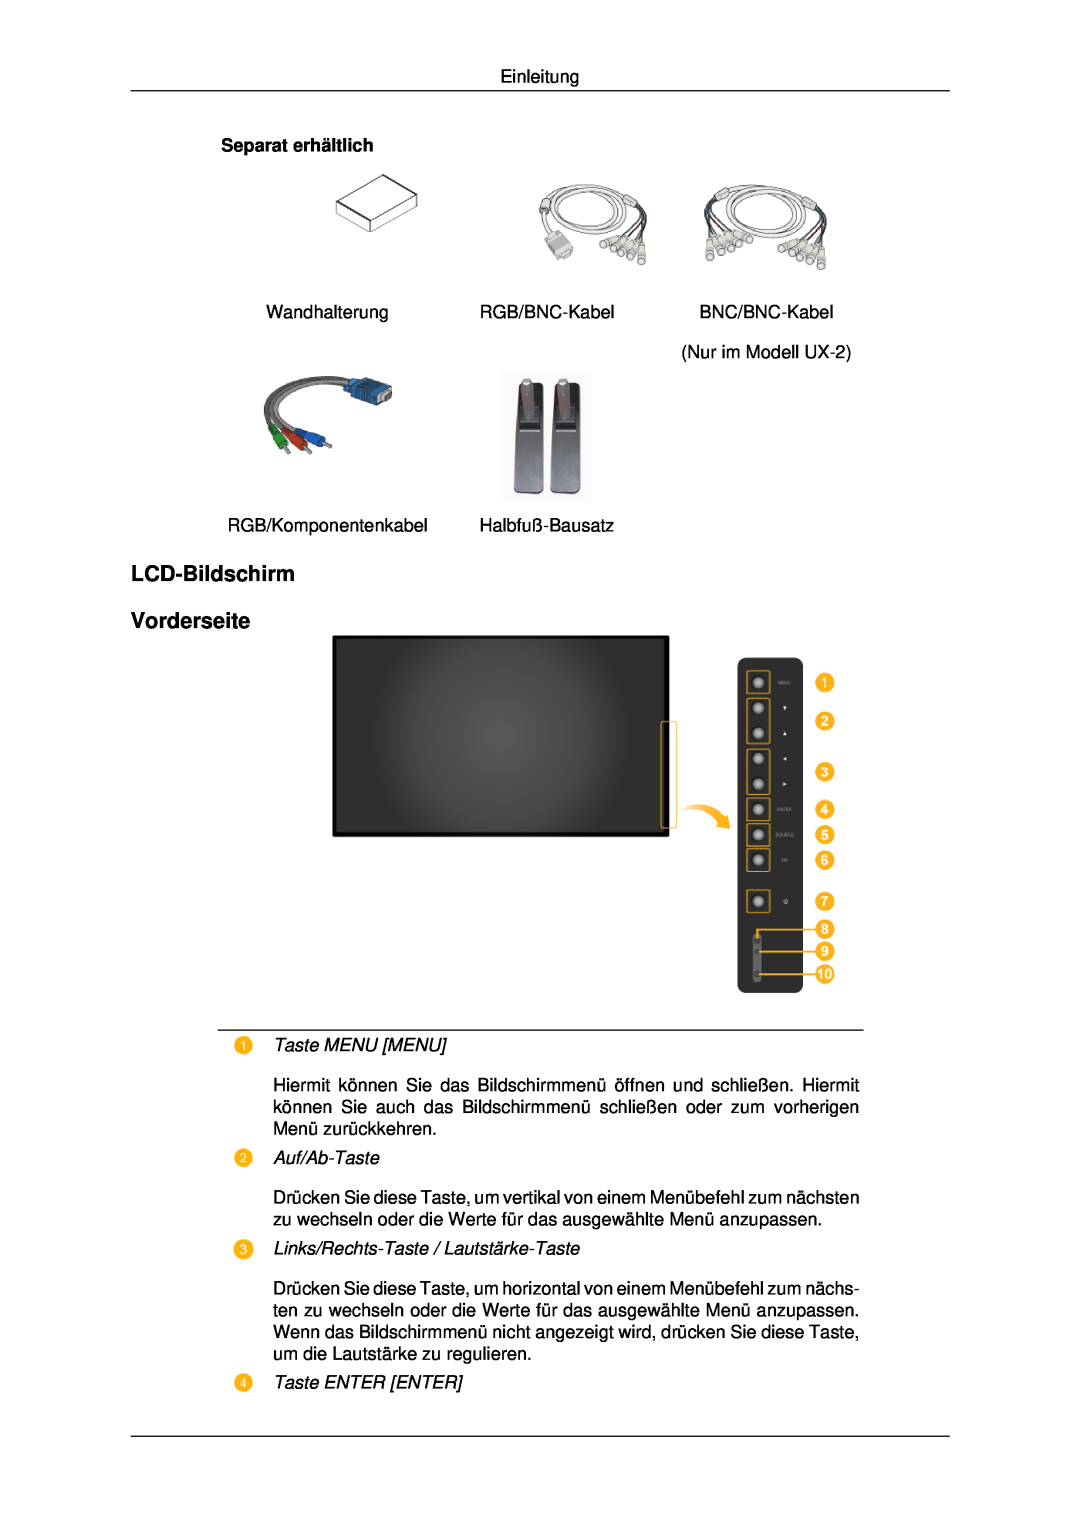 Samsung LH46MSTABB/EN LCD-Bildschirm Vorderseite, Taste MENU MENU, Auf/Ab-Taste, Links/Rechts-Taste / Lautstärke-Taste 